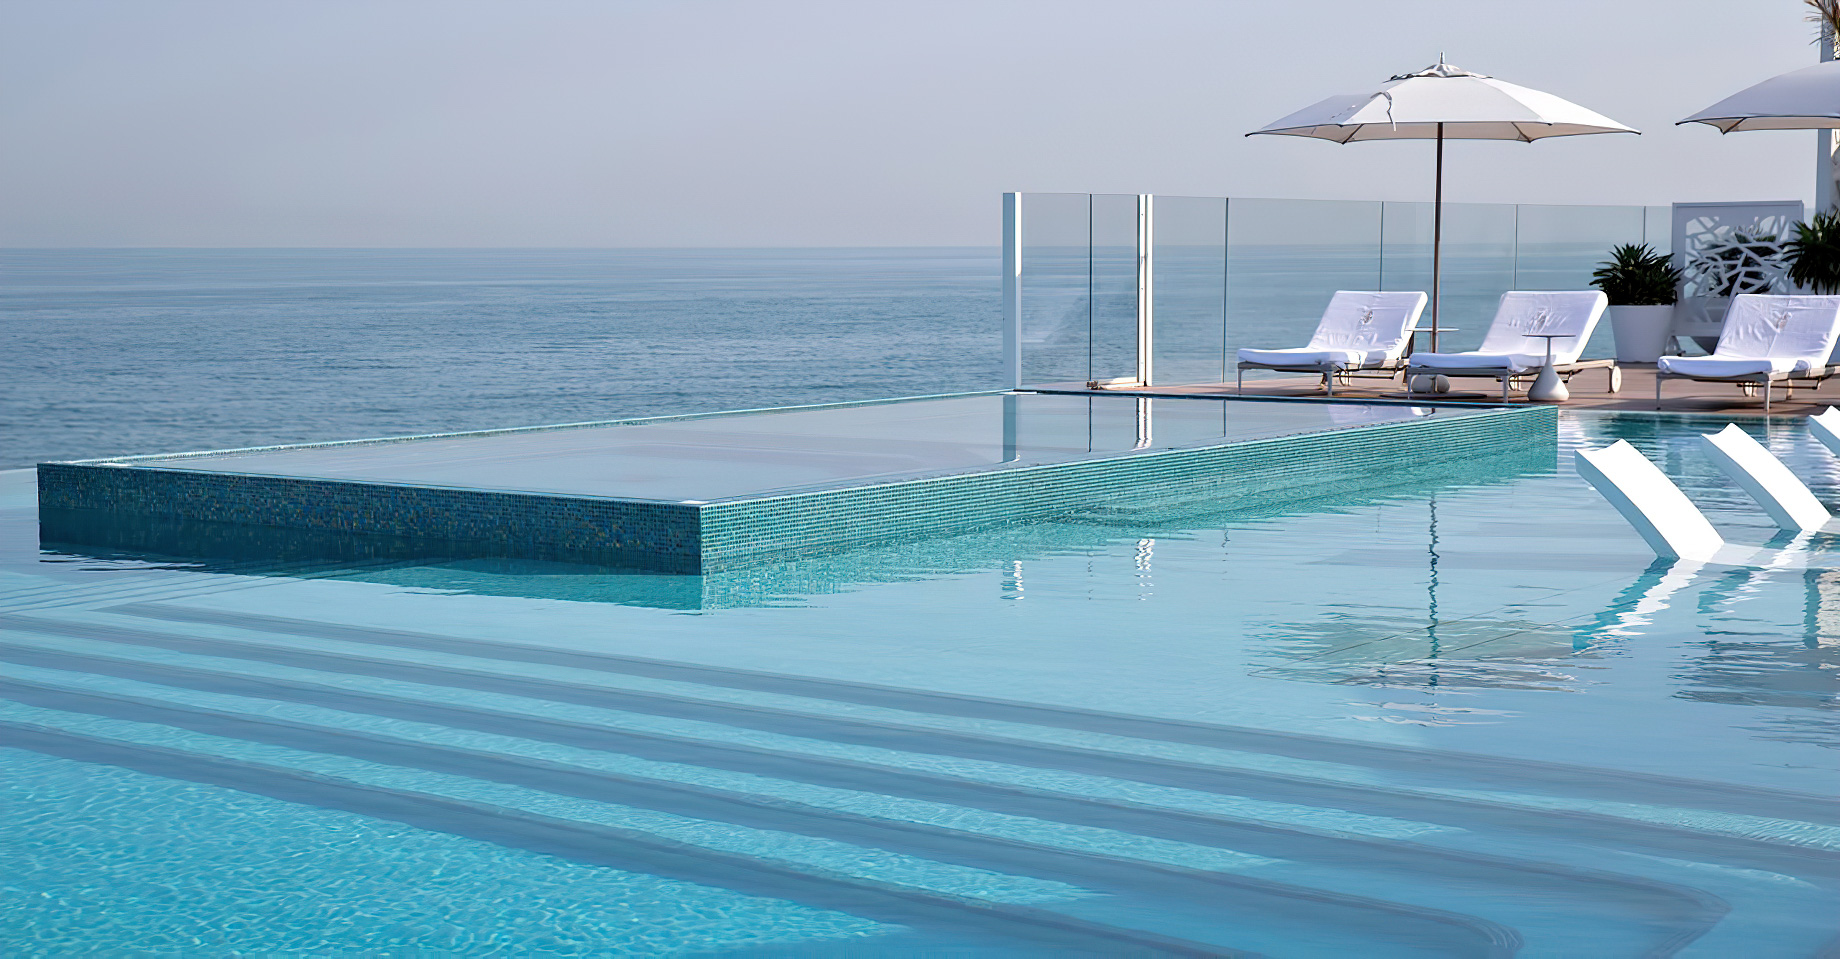 Burj Al Arab Jumeirah Hotel – Dubai, UAE – Burj Al Arab Terrace Infinity Pool Ocean View